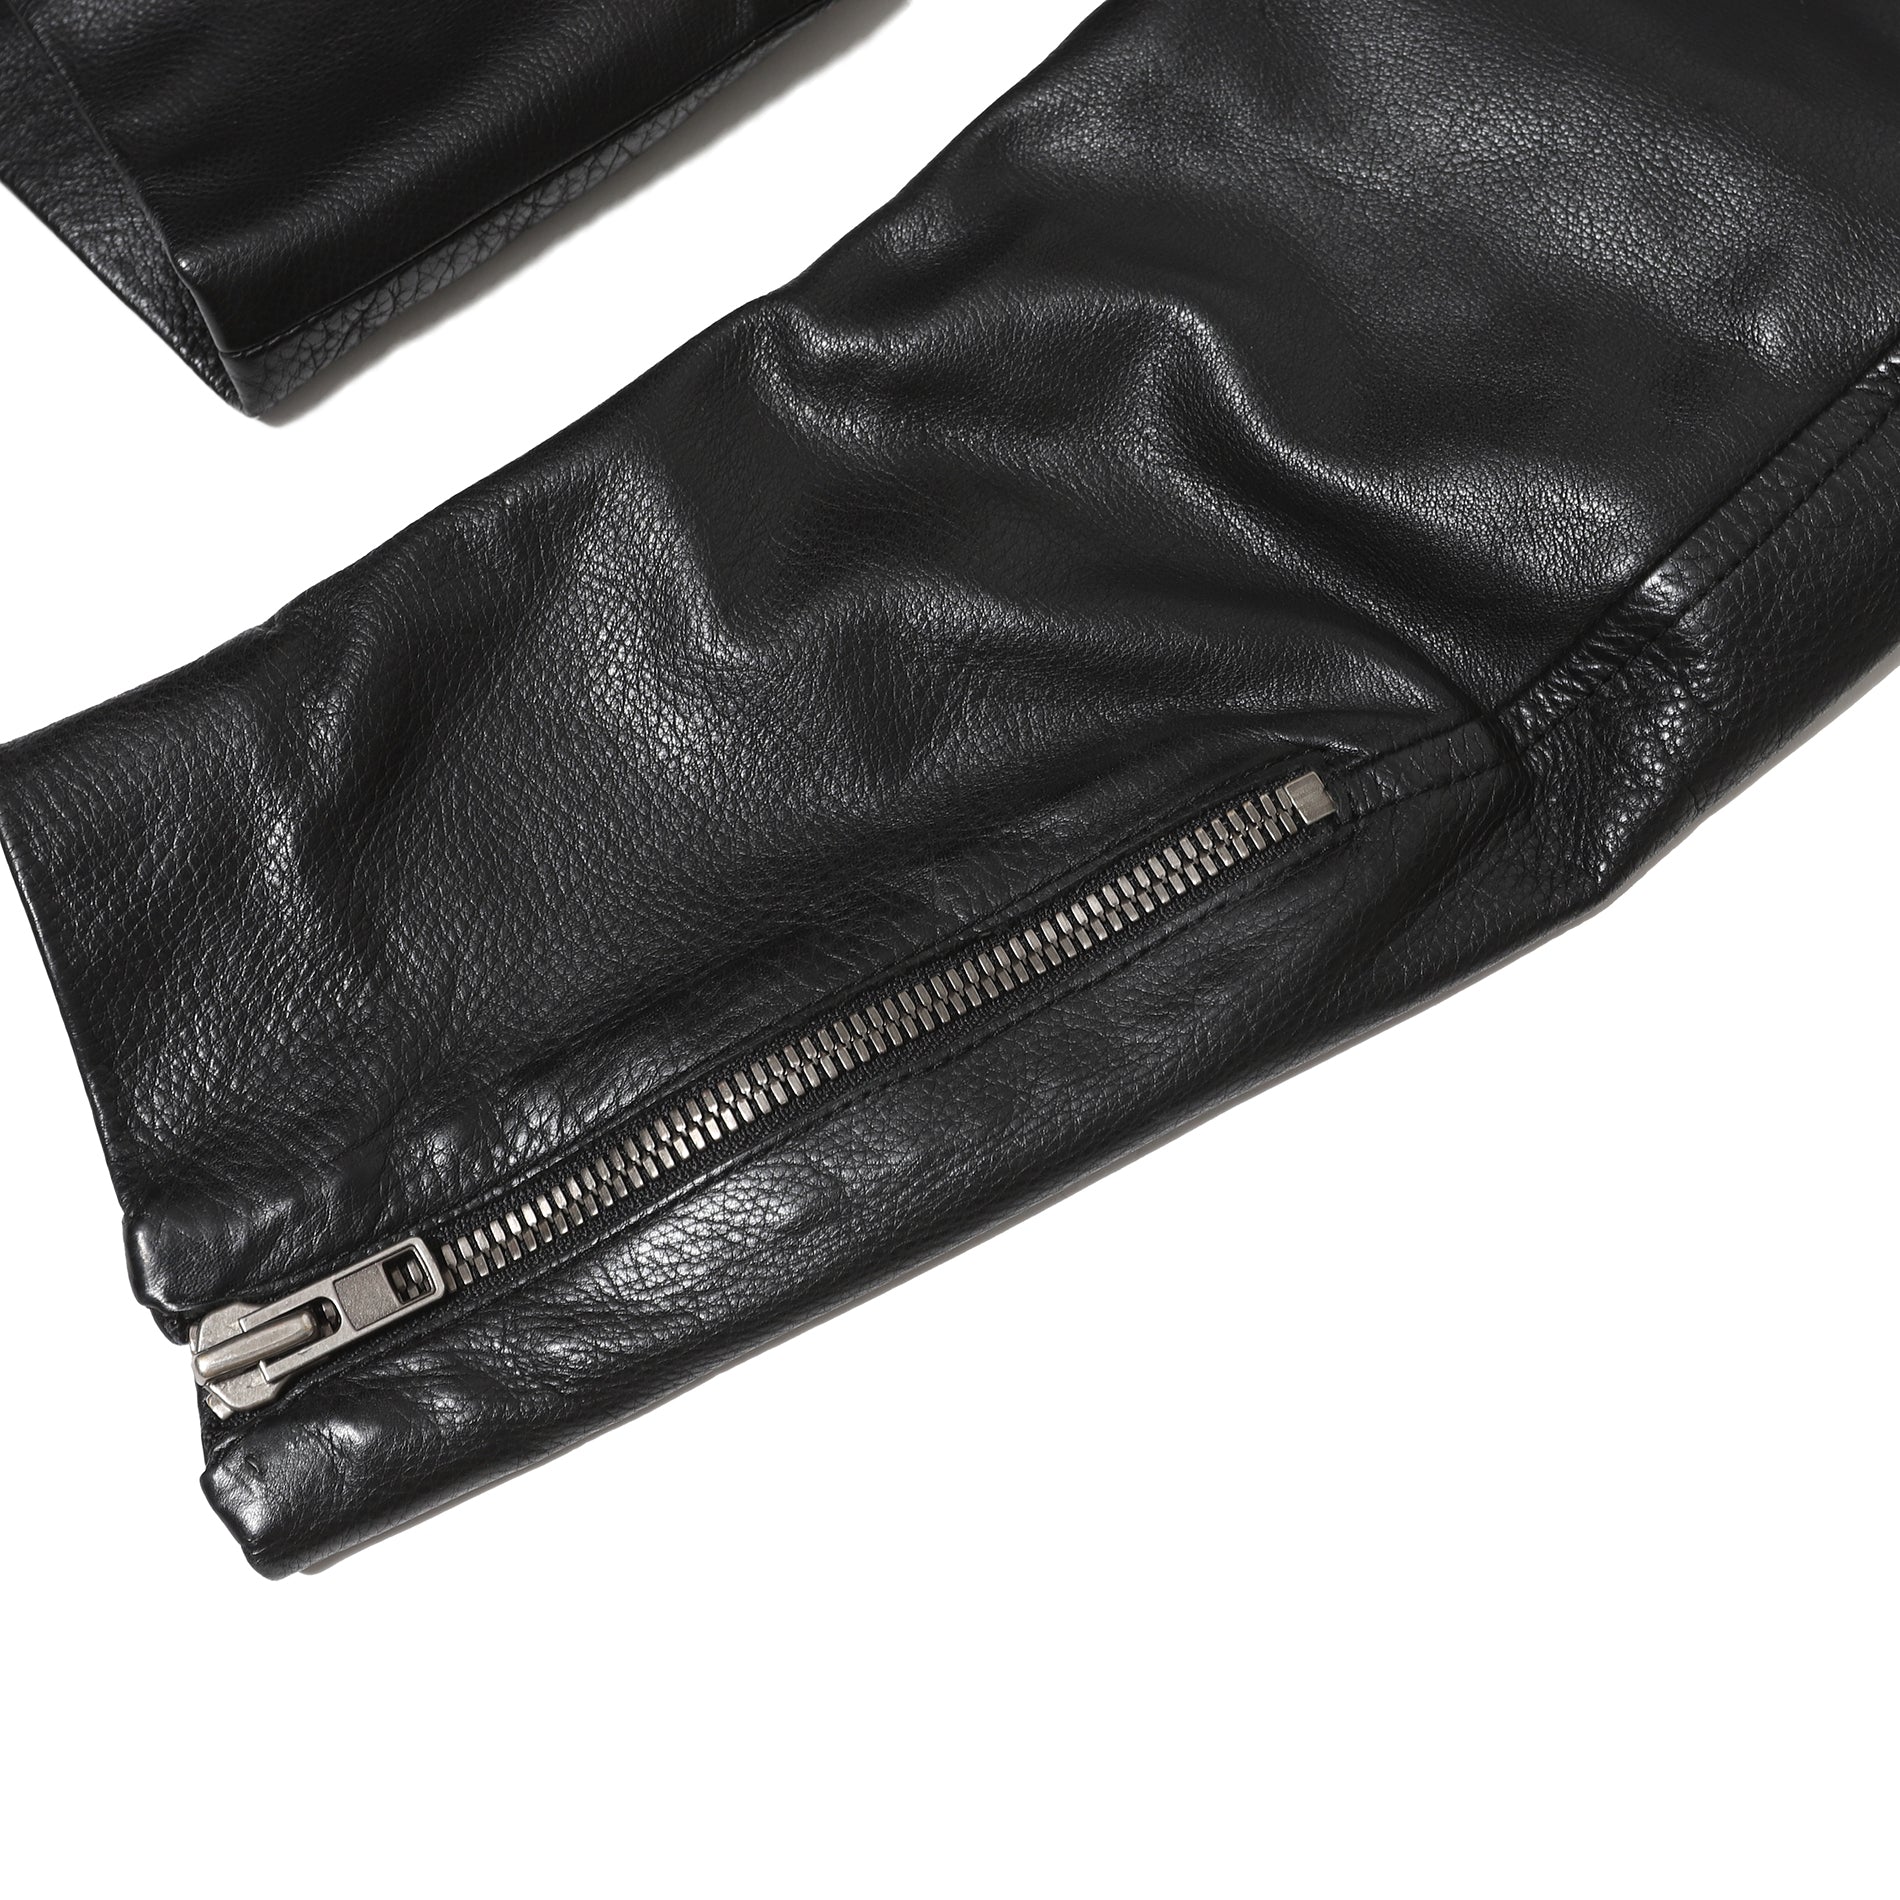 Maison Martin Margiela SS08 5-Zip Leather Jacker